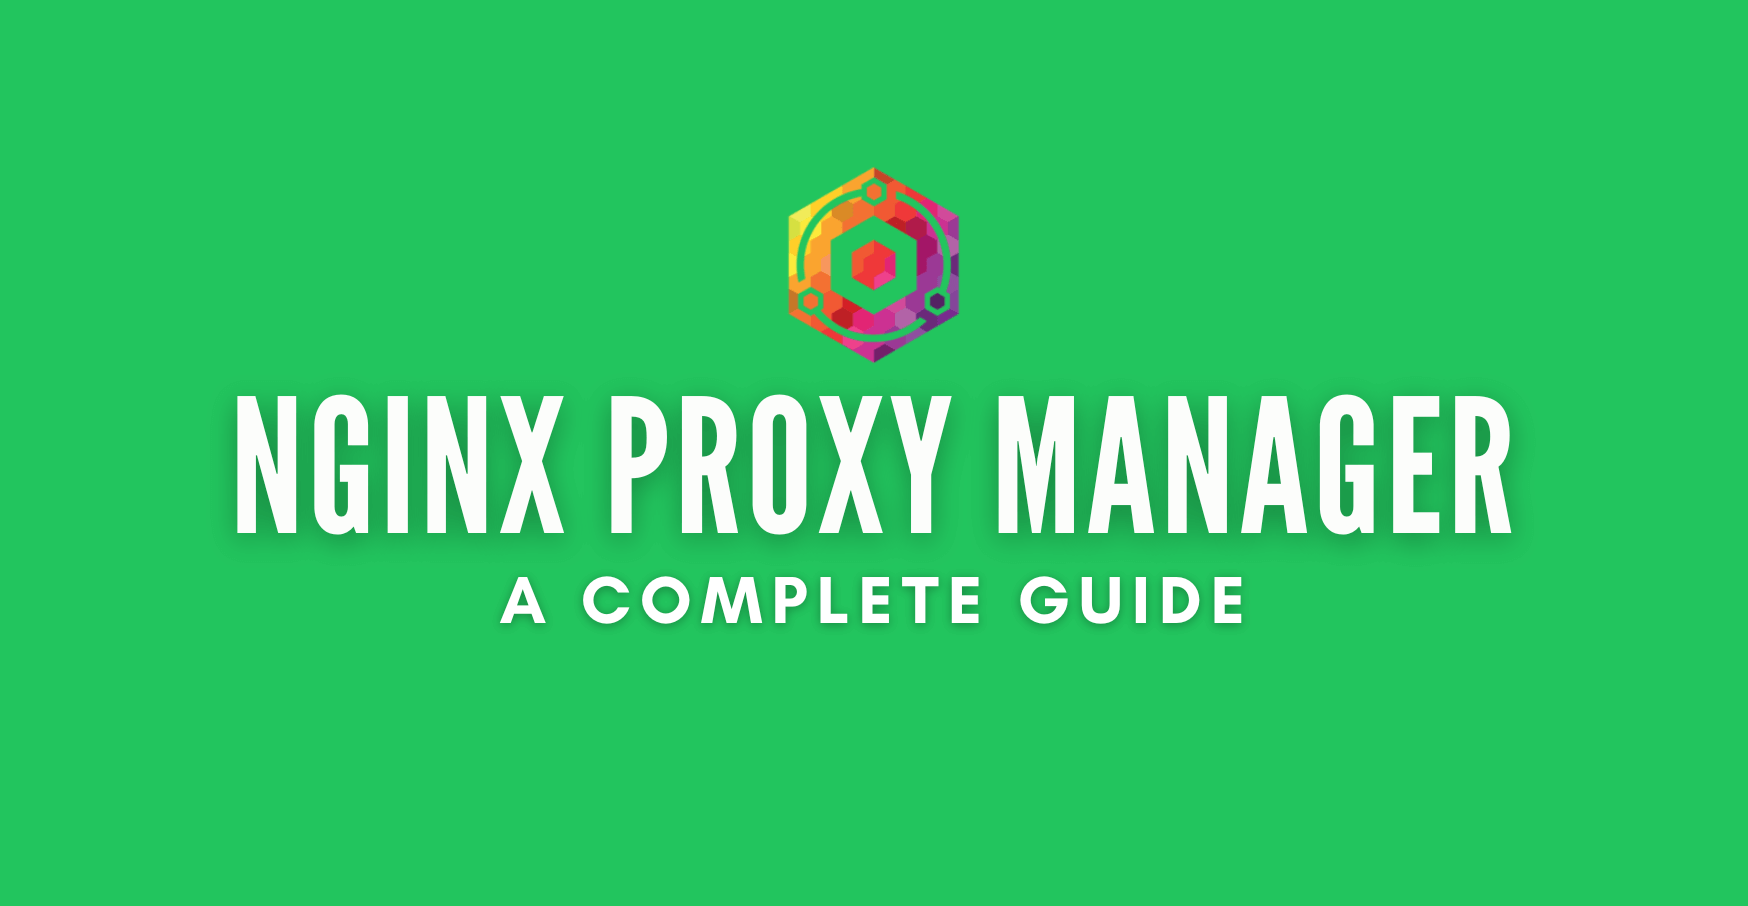 Nginx proxy manager